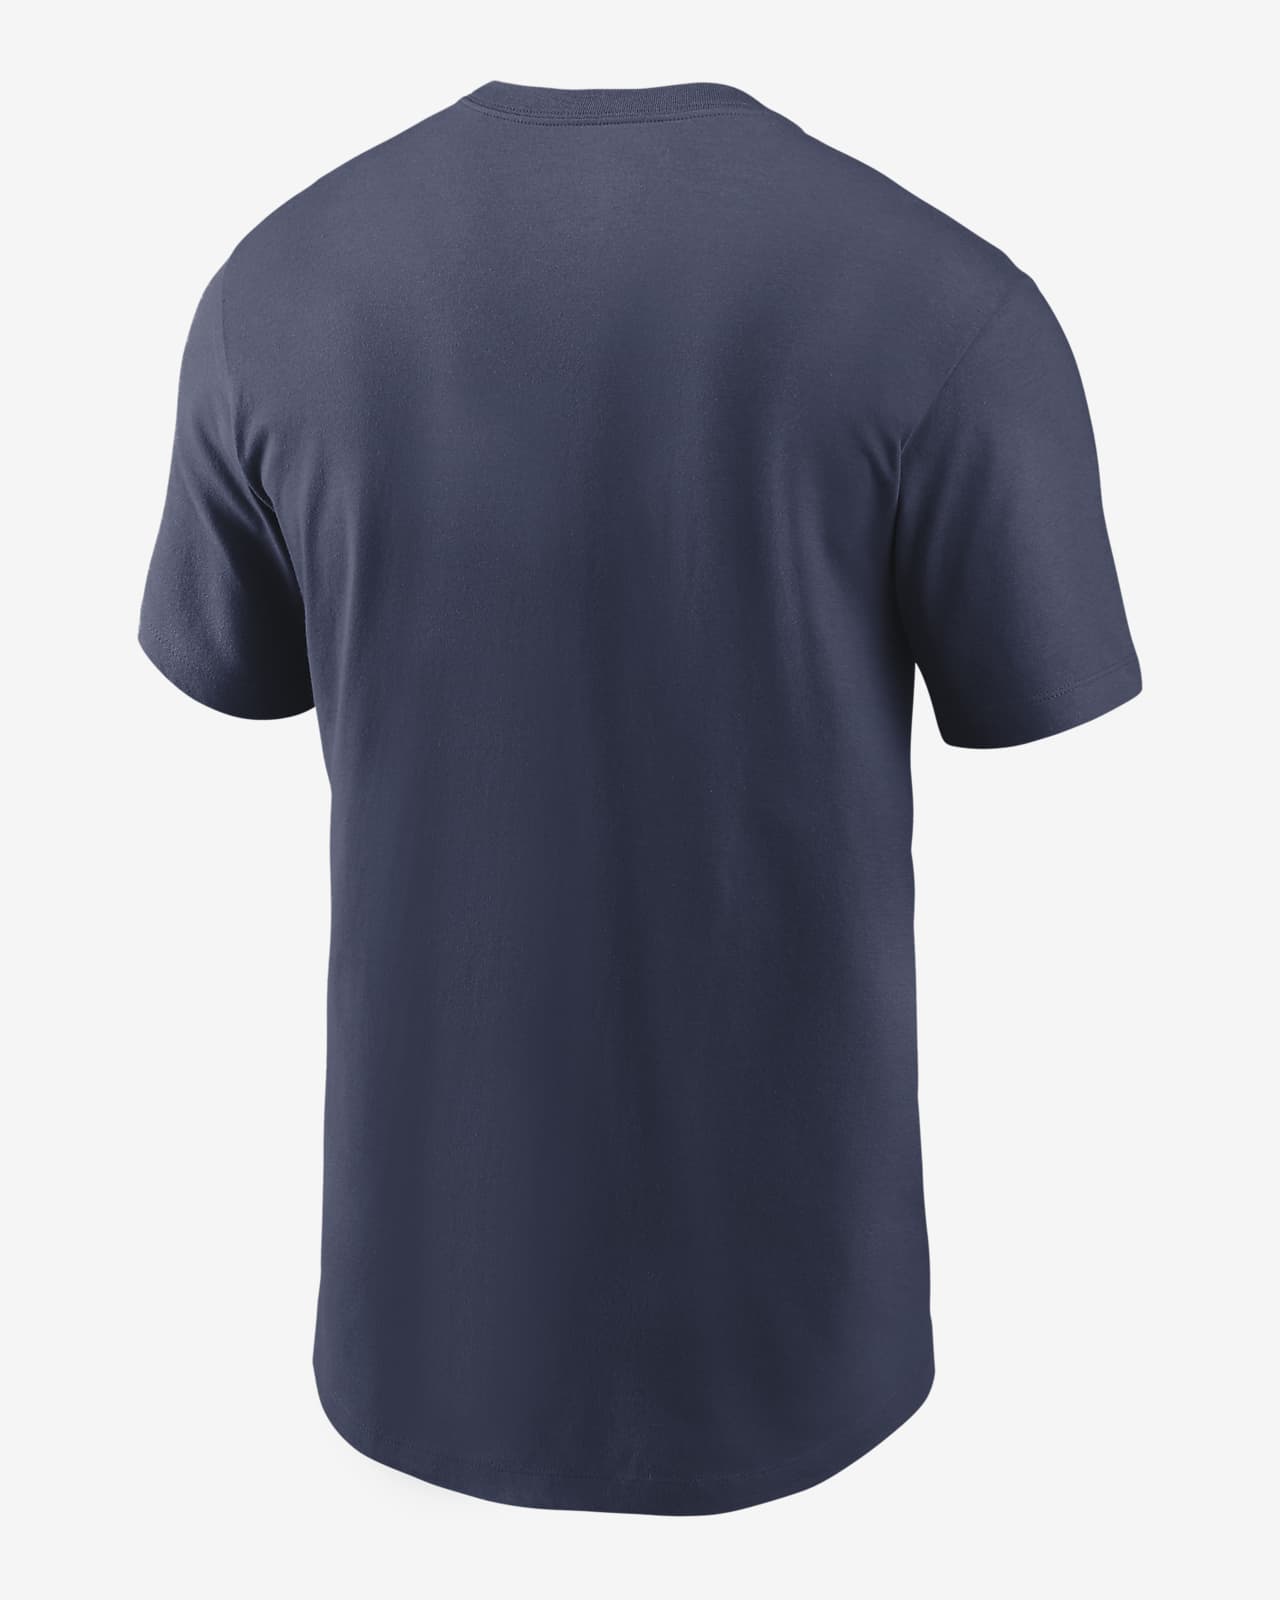  Bluejack Clothing Cubs Baseball T-Shirt 2376 (Small,Black) :  Sports & Outdoors